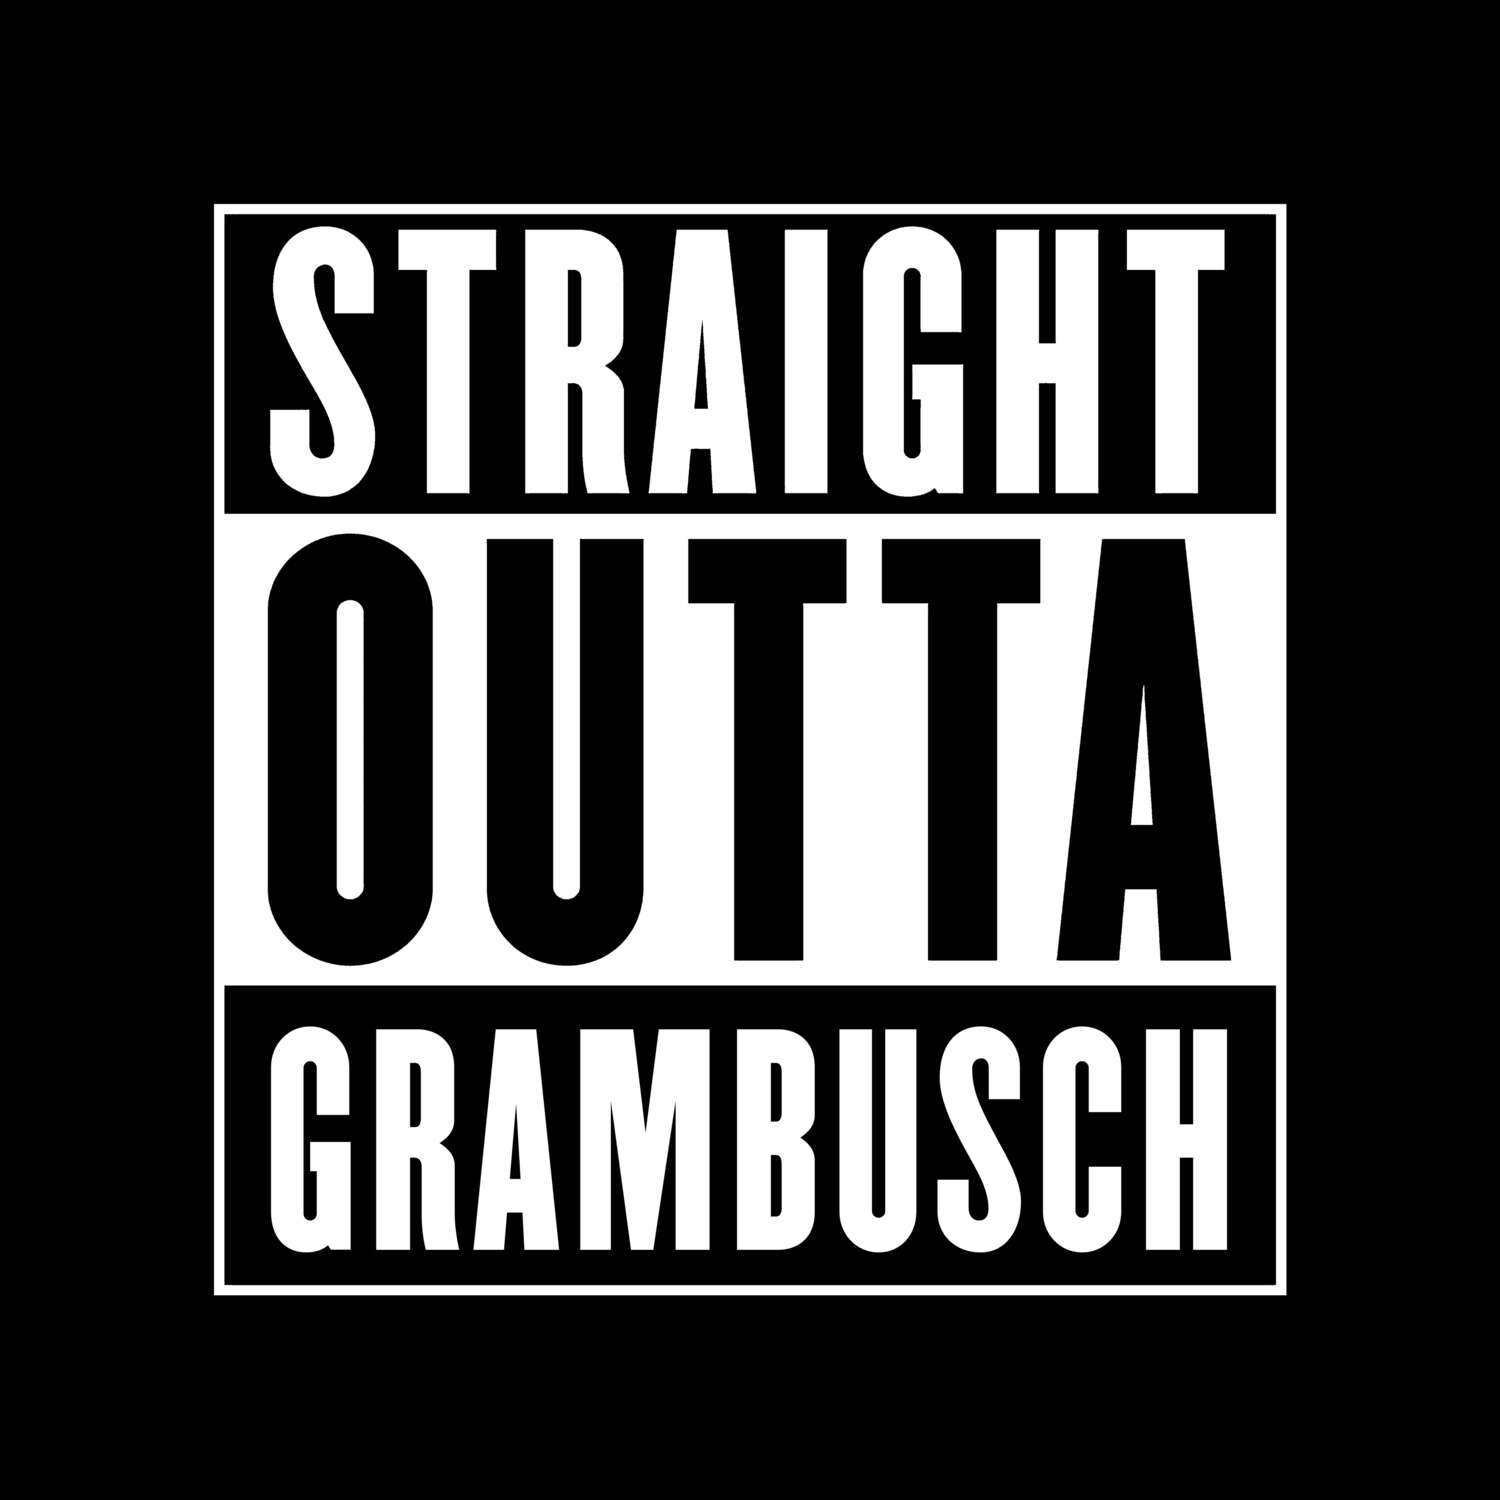 Grambusch T-Shirt »Straight Outta«